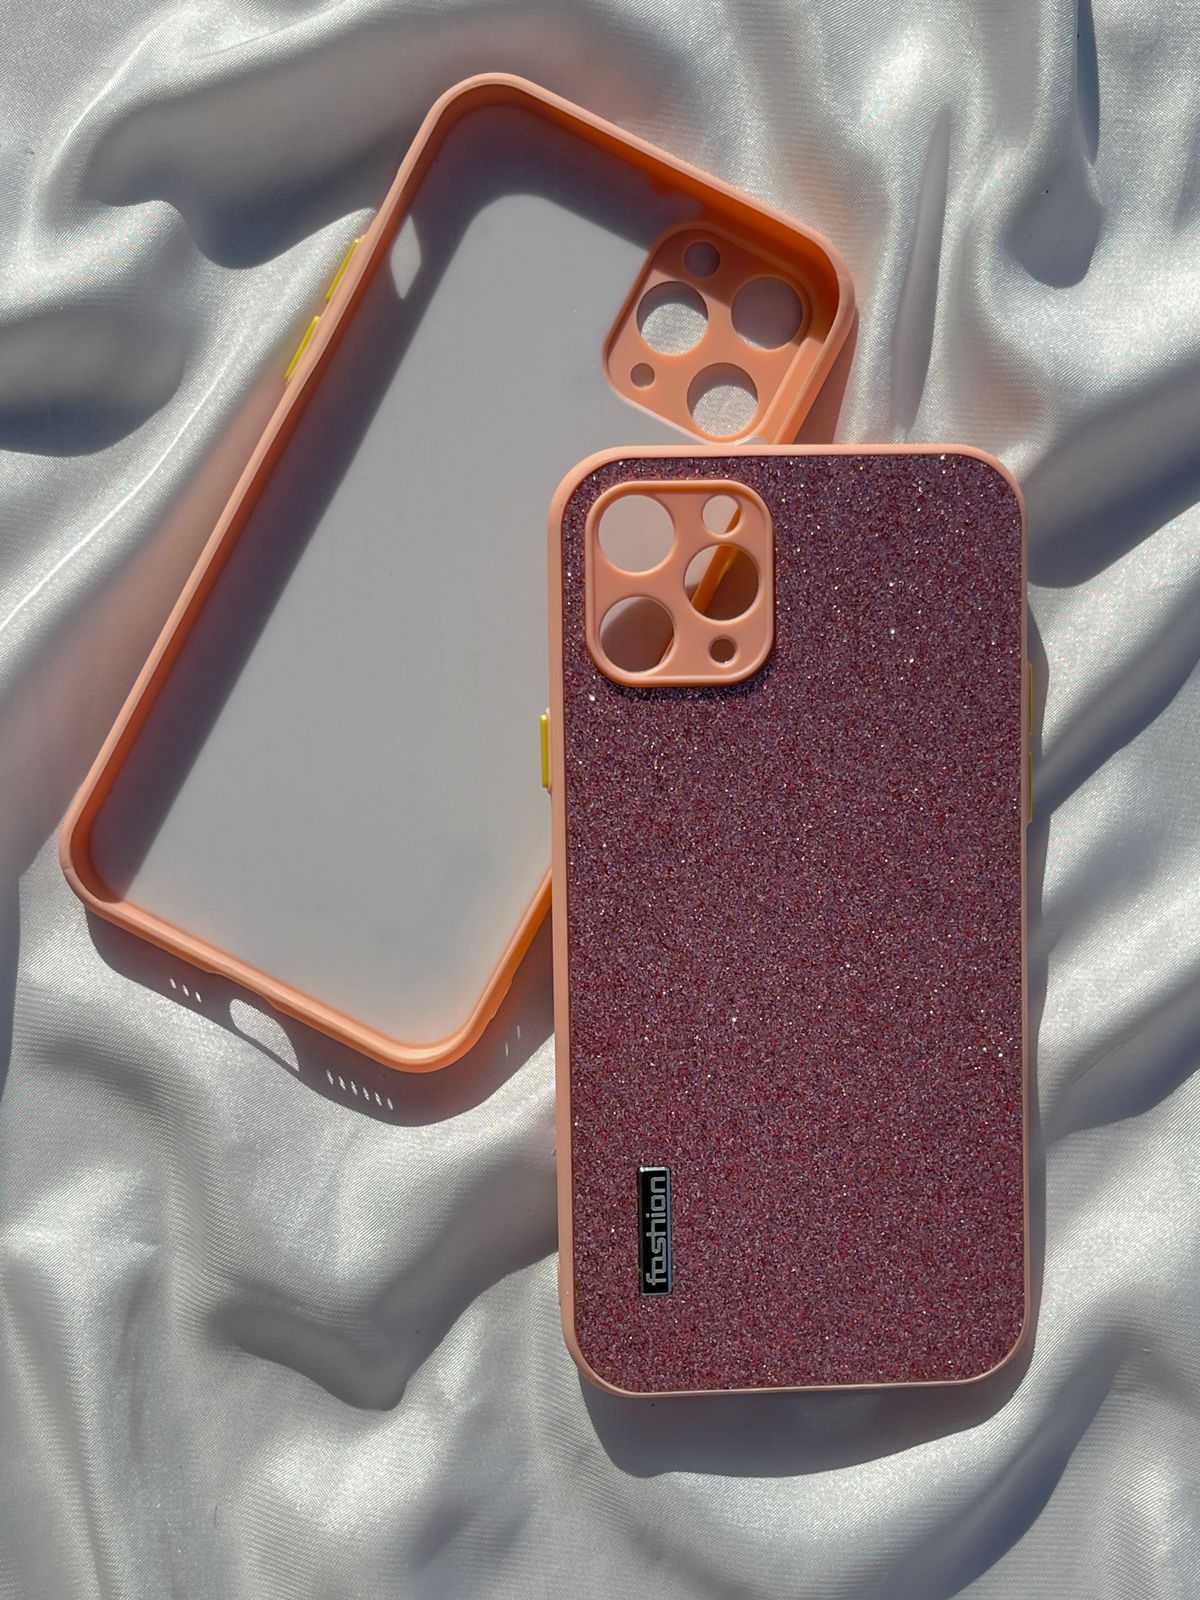 iPhone "11 Pro" Glitter Sparkle Case